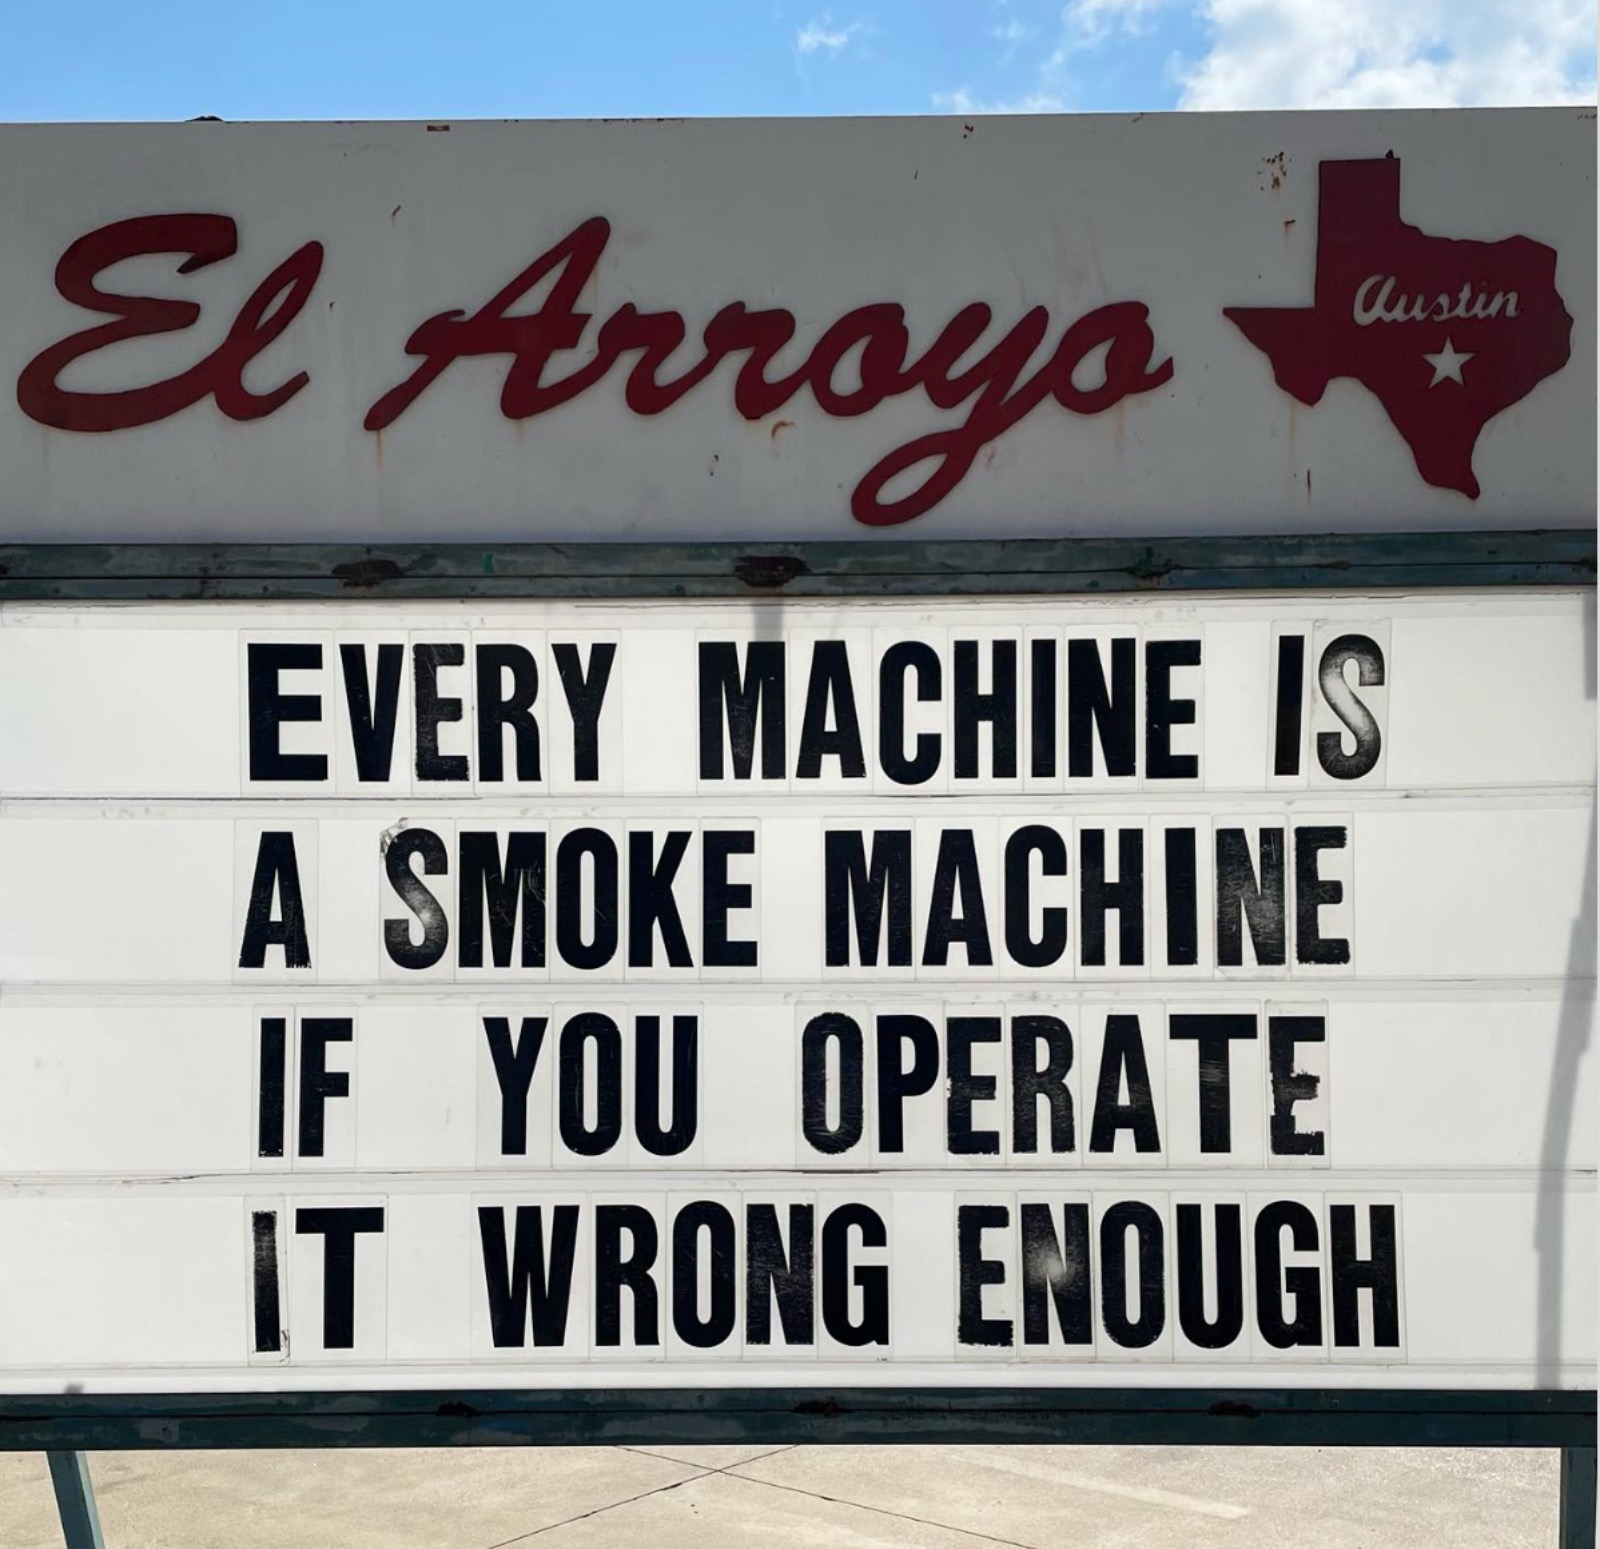 meme about machines